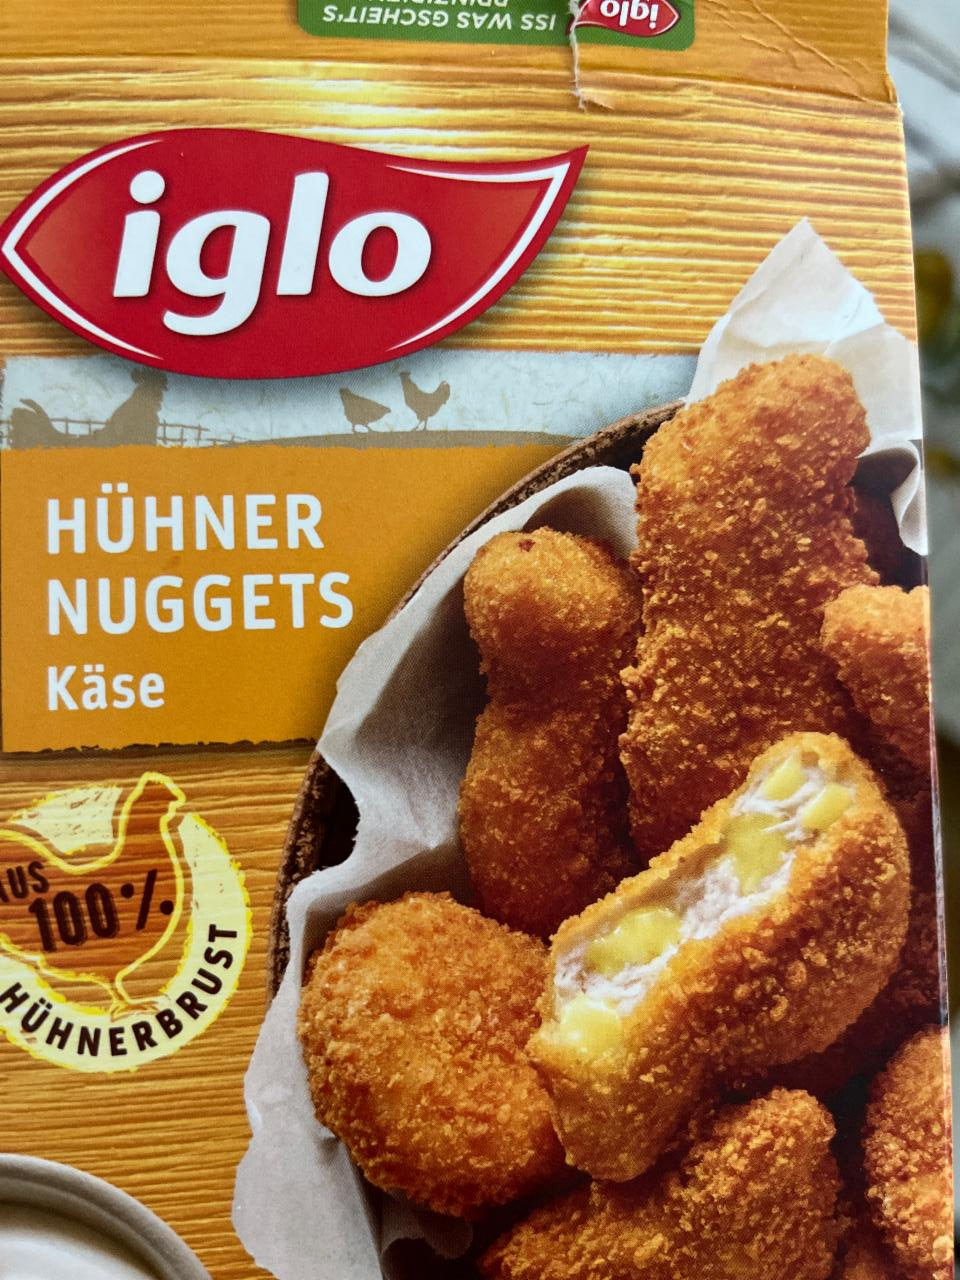 Fotografie - iglo Hünter nuggets käse